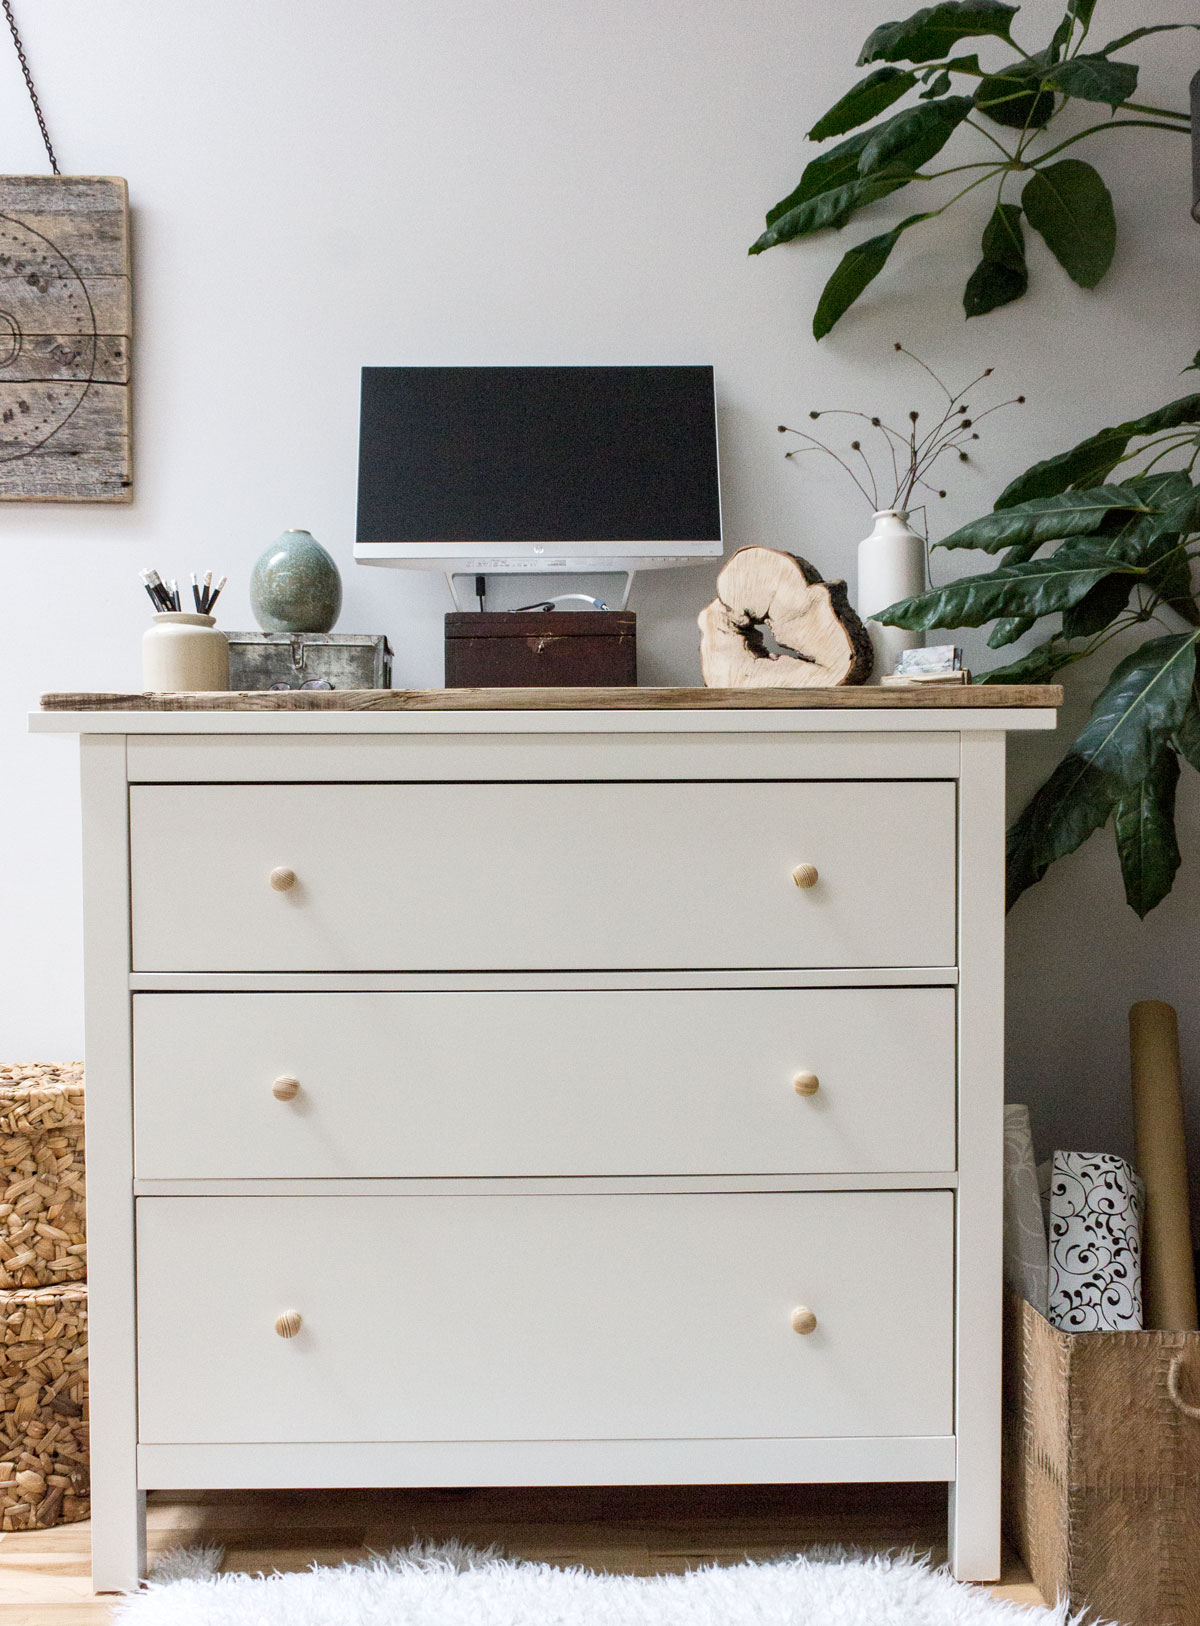  Click for full post on DIY standing desk from an IKEA dresser